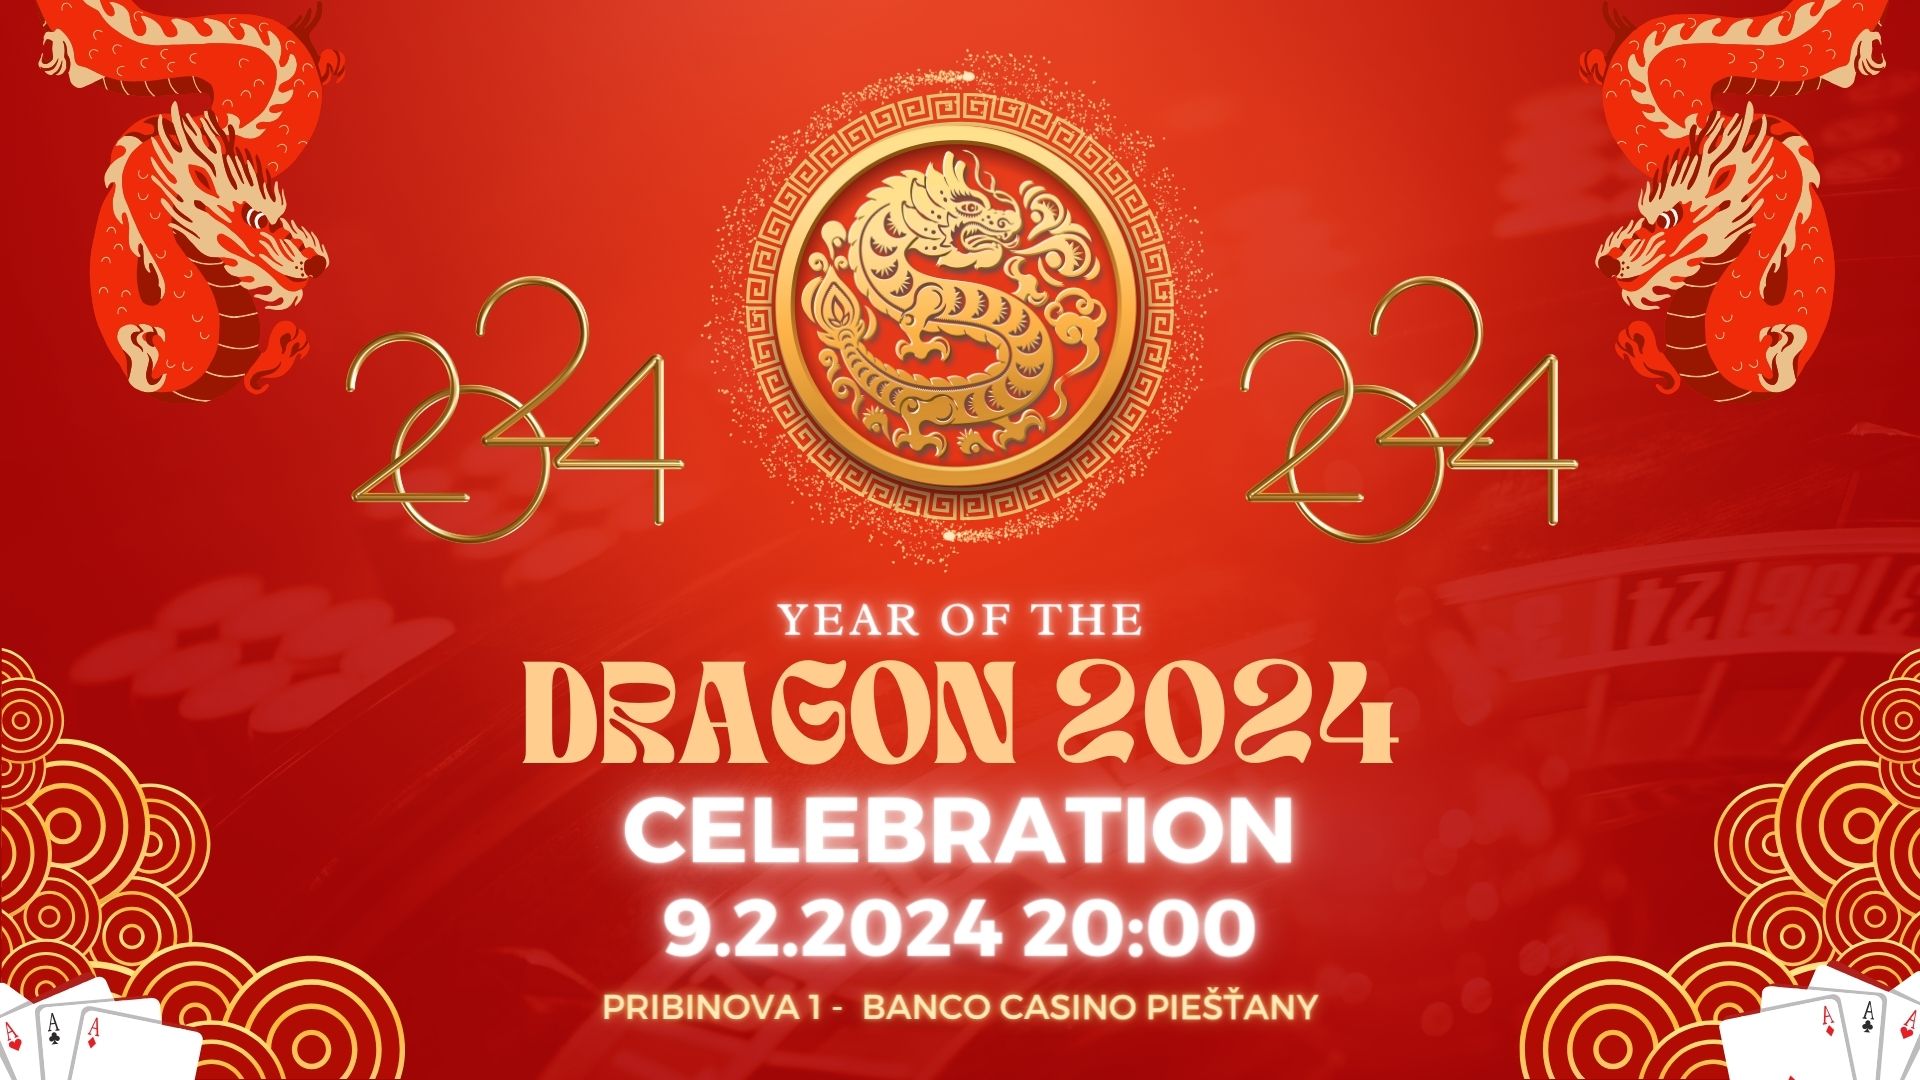  Tết nguyên đán / Celebrate the Chinese New Year at Banco Casino Piešťany